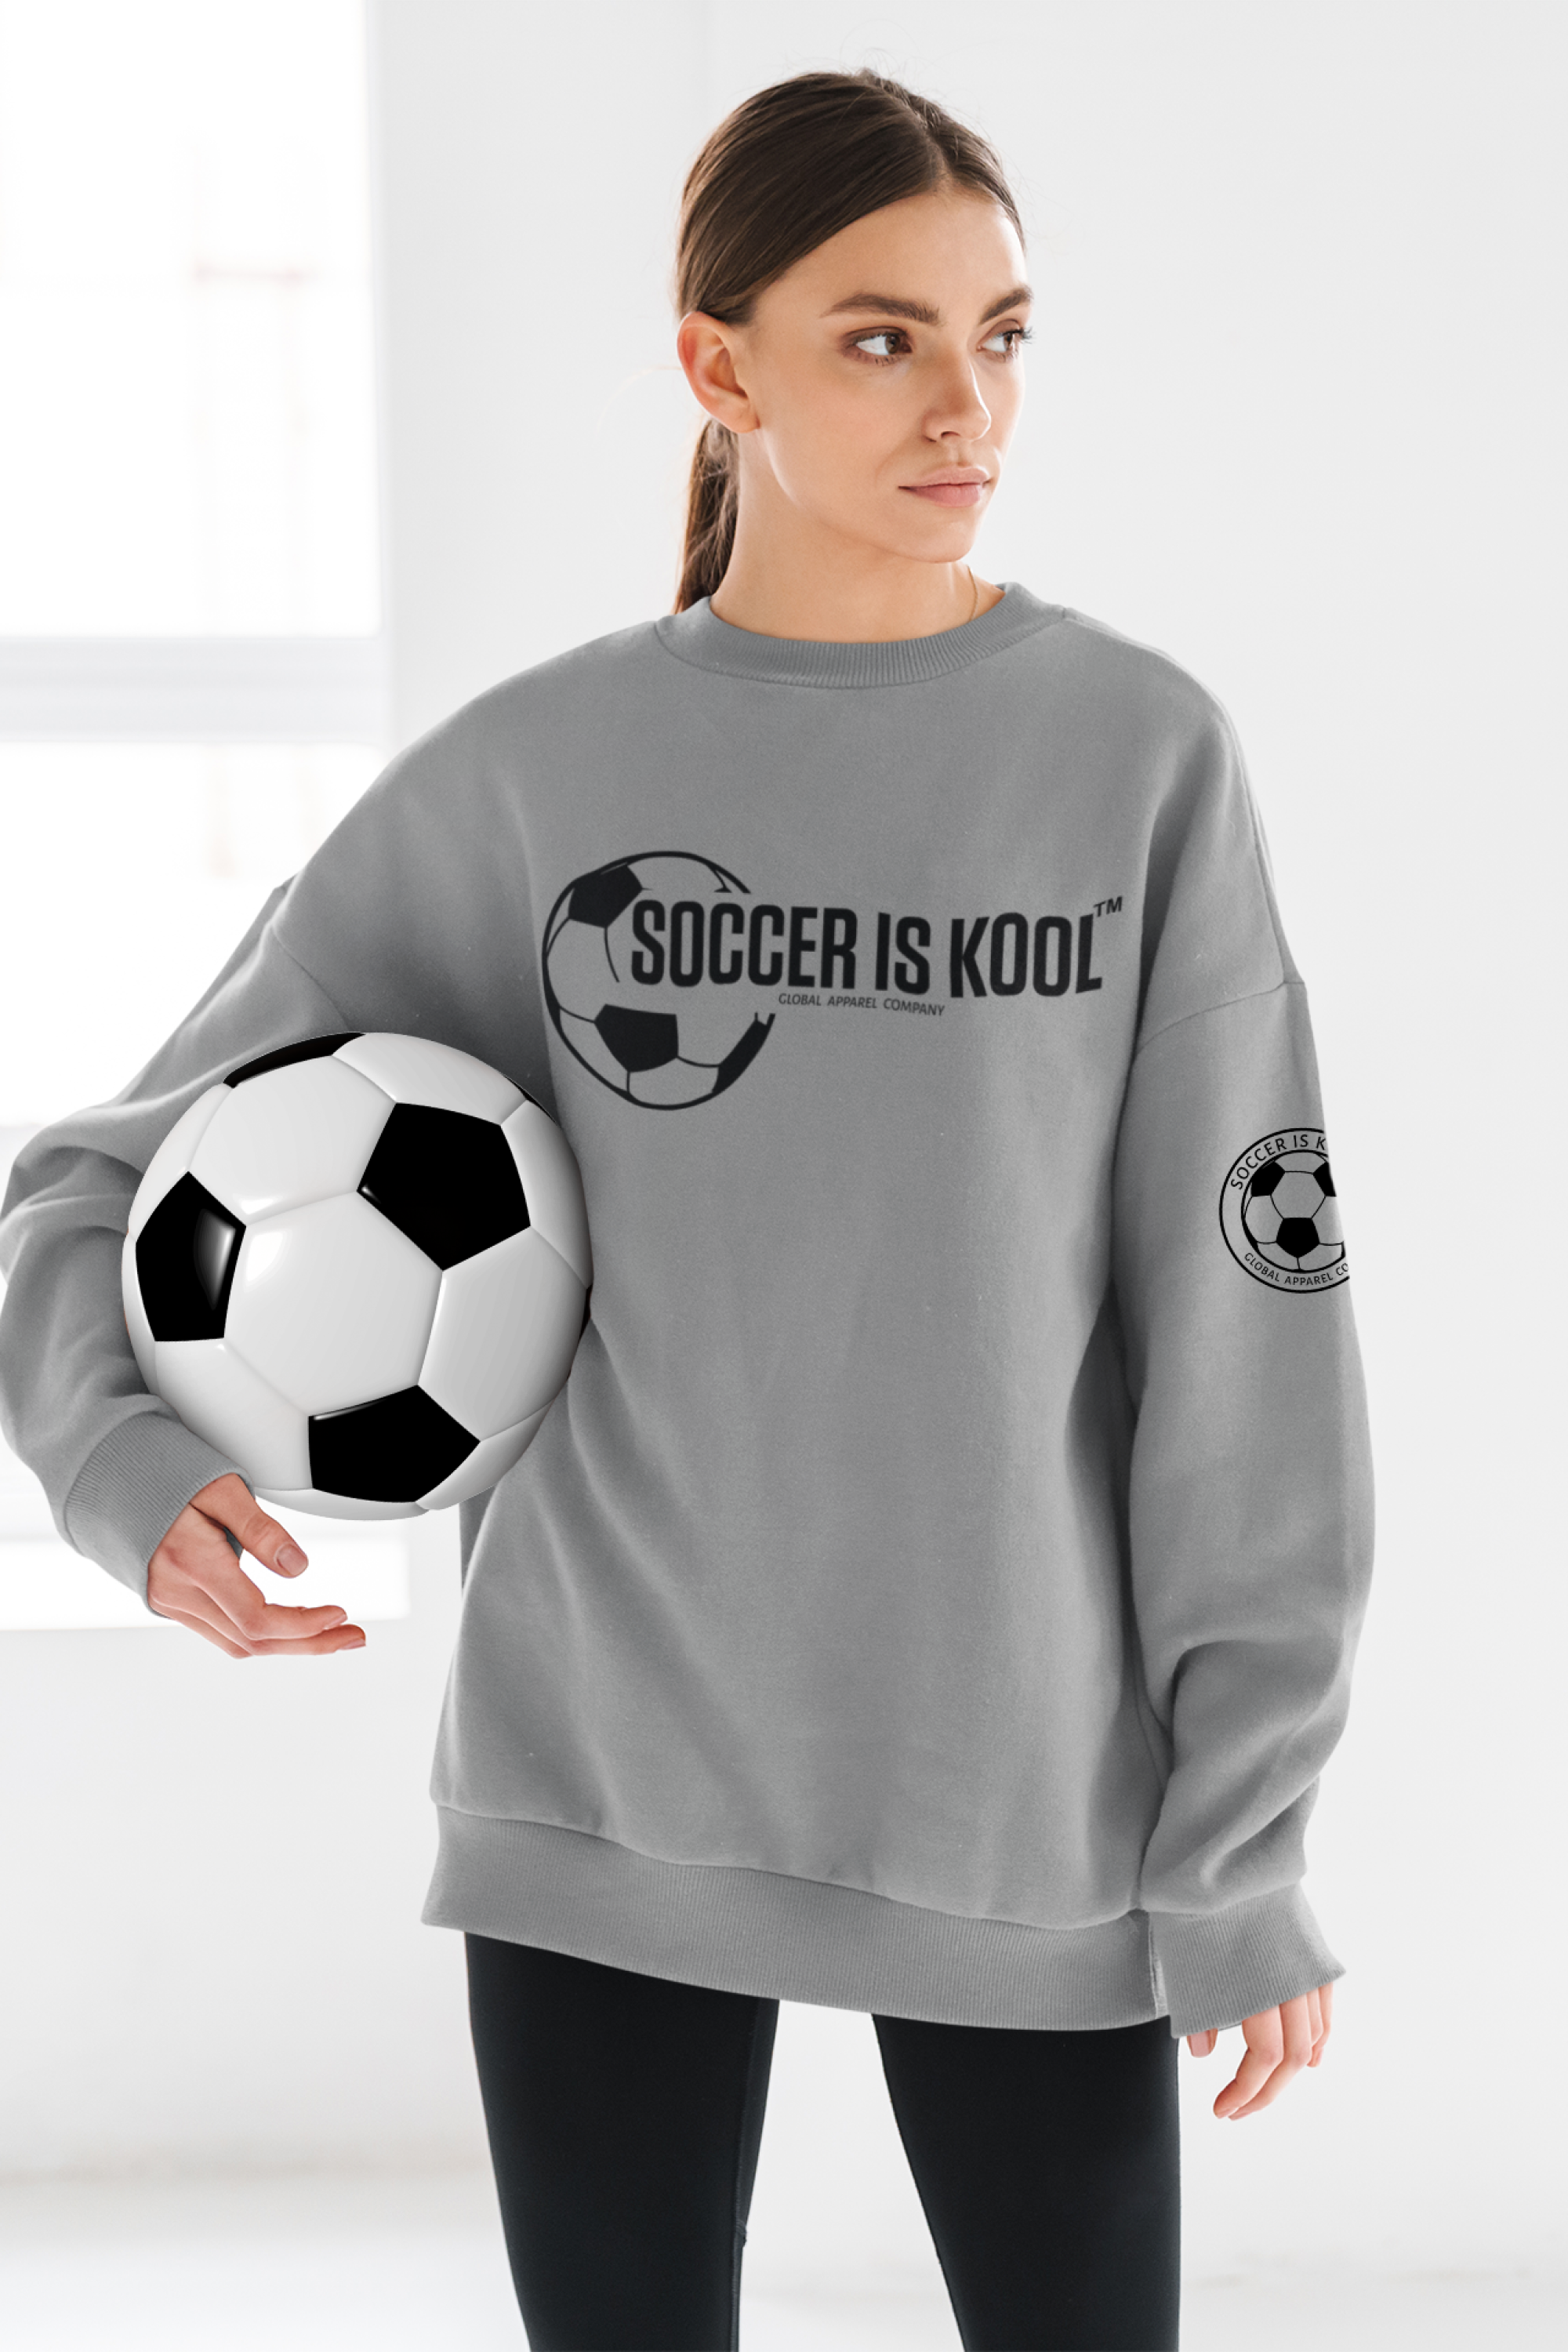 Soccer Is Kool - Crewneck Gray